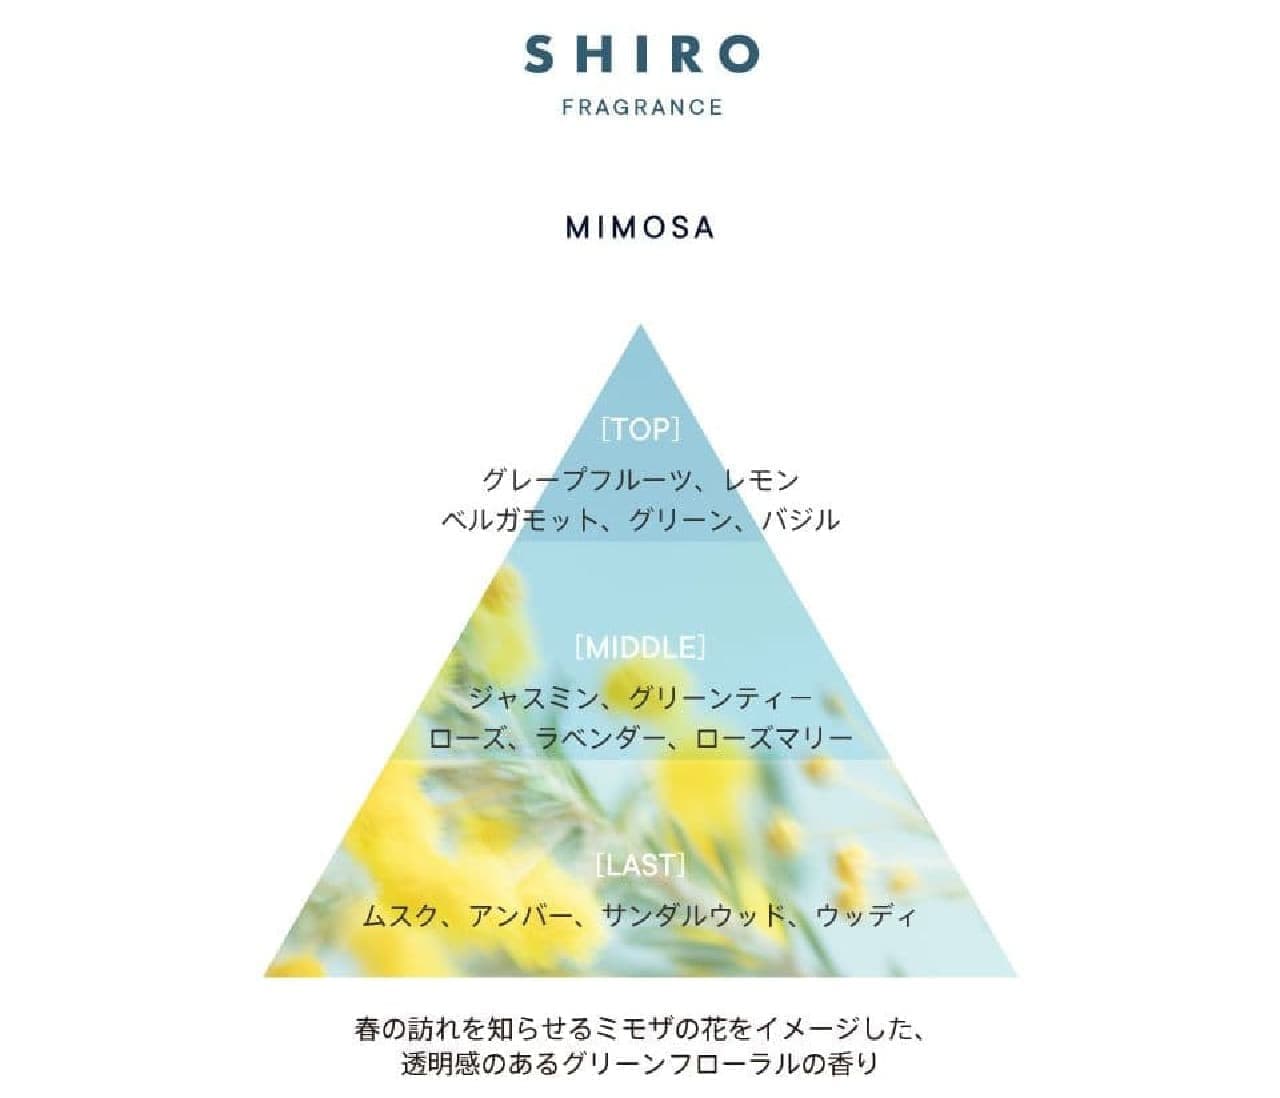 SHIRO 限定フレグランス“ミモザ”